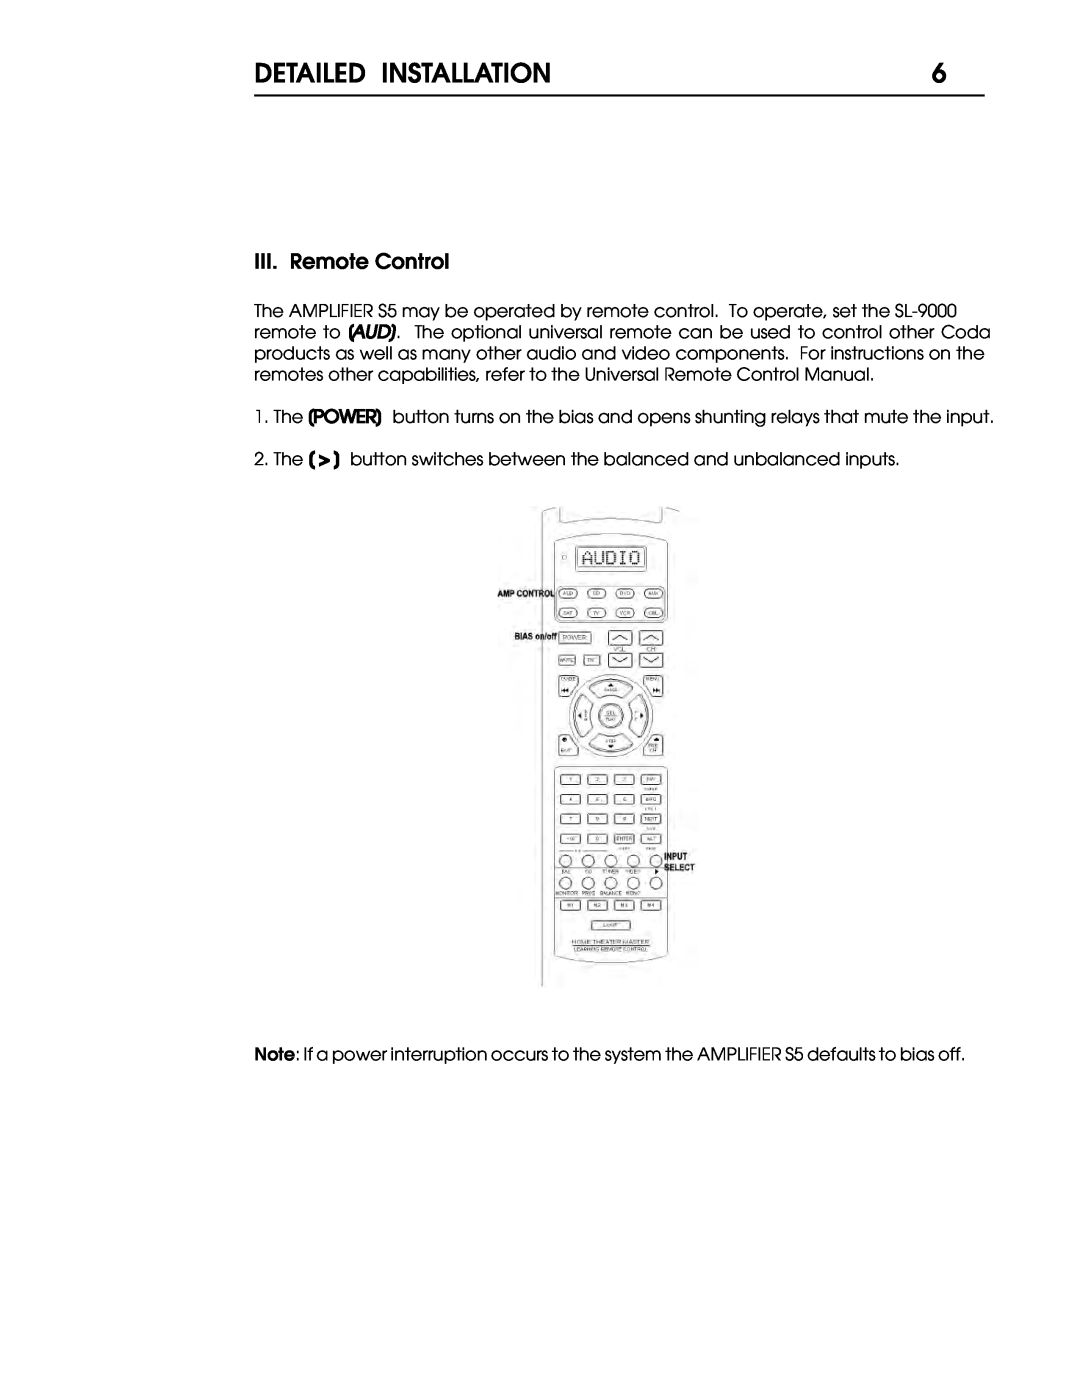 Coda S5 operation manual Detailed Installation, III. Remote Control 